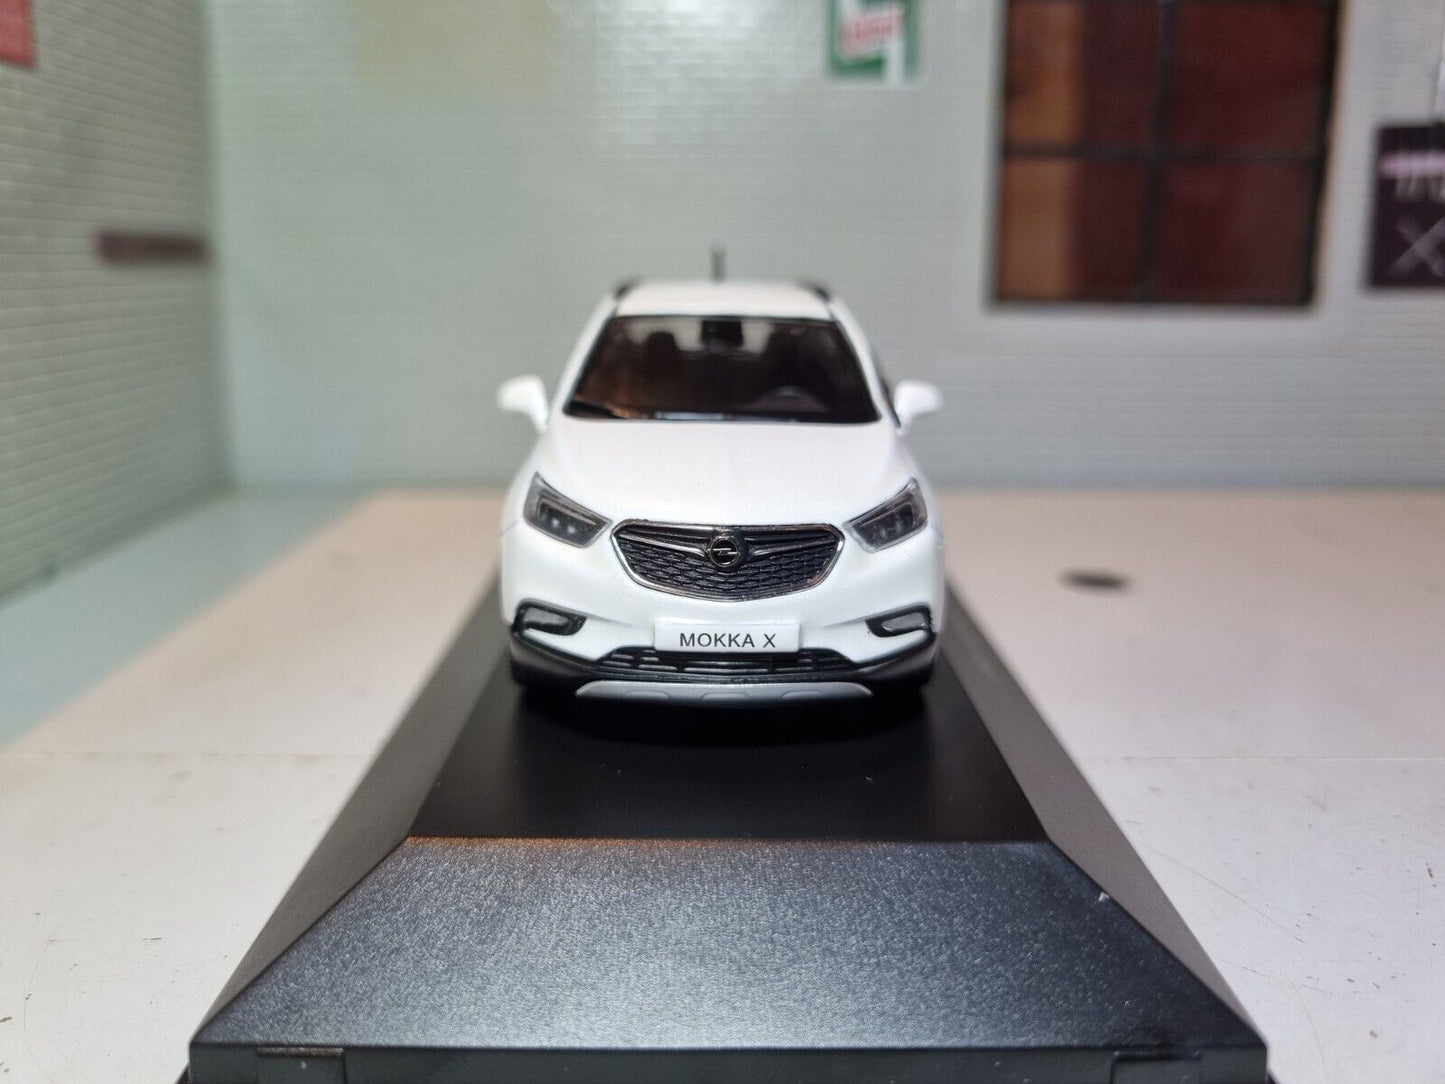 Opel 2018 Mokka X OC10921  iScale 1:43